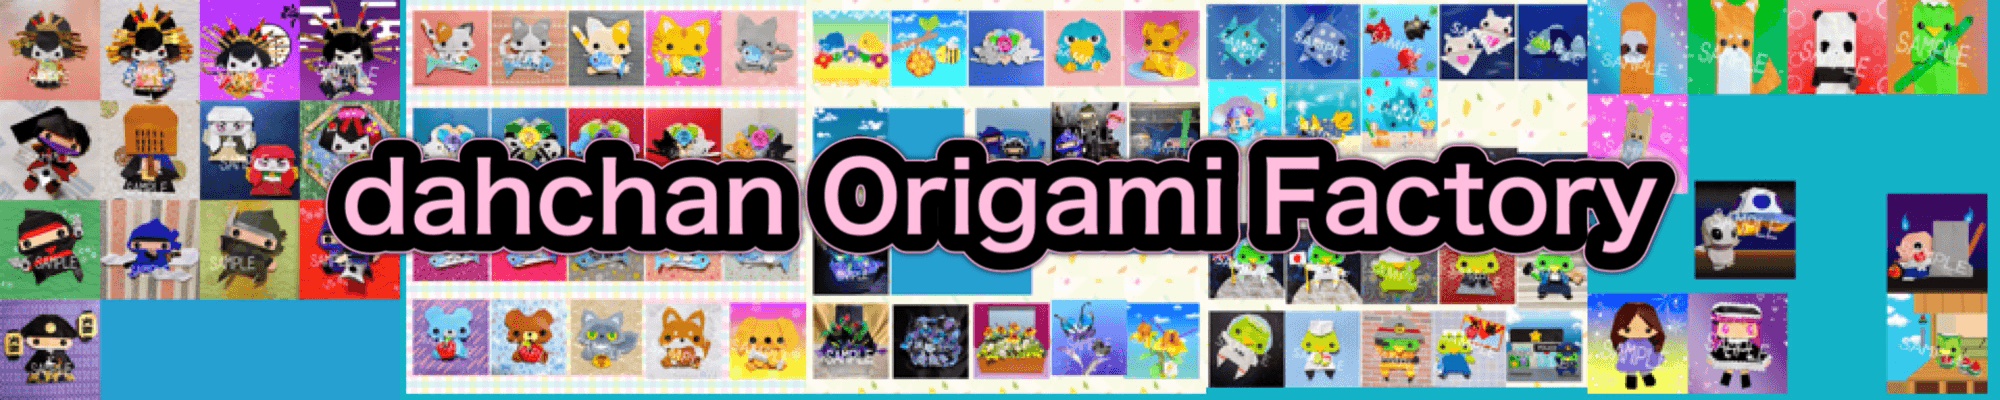 dahchan_origami_Factory バナー